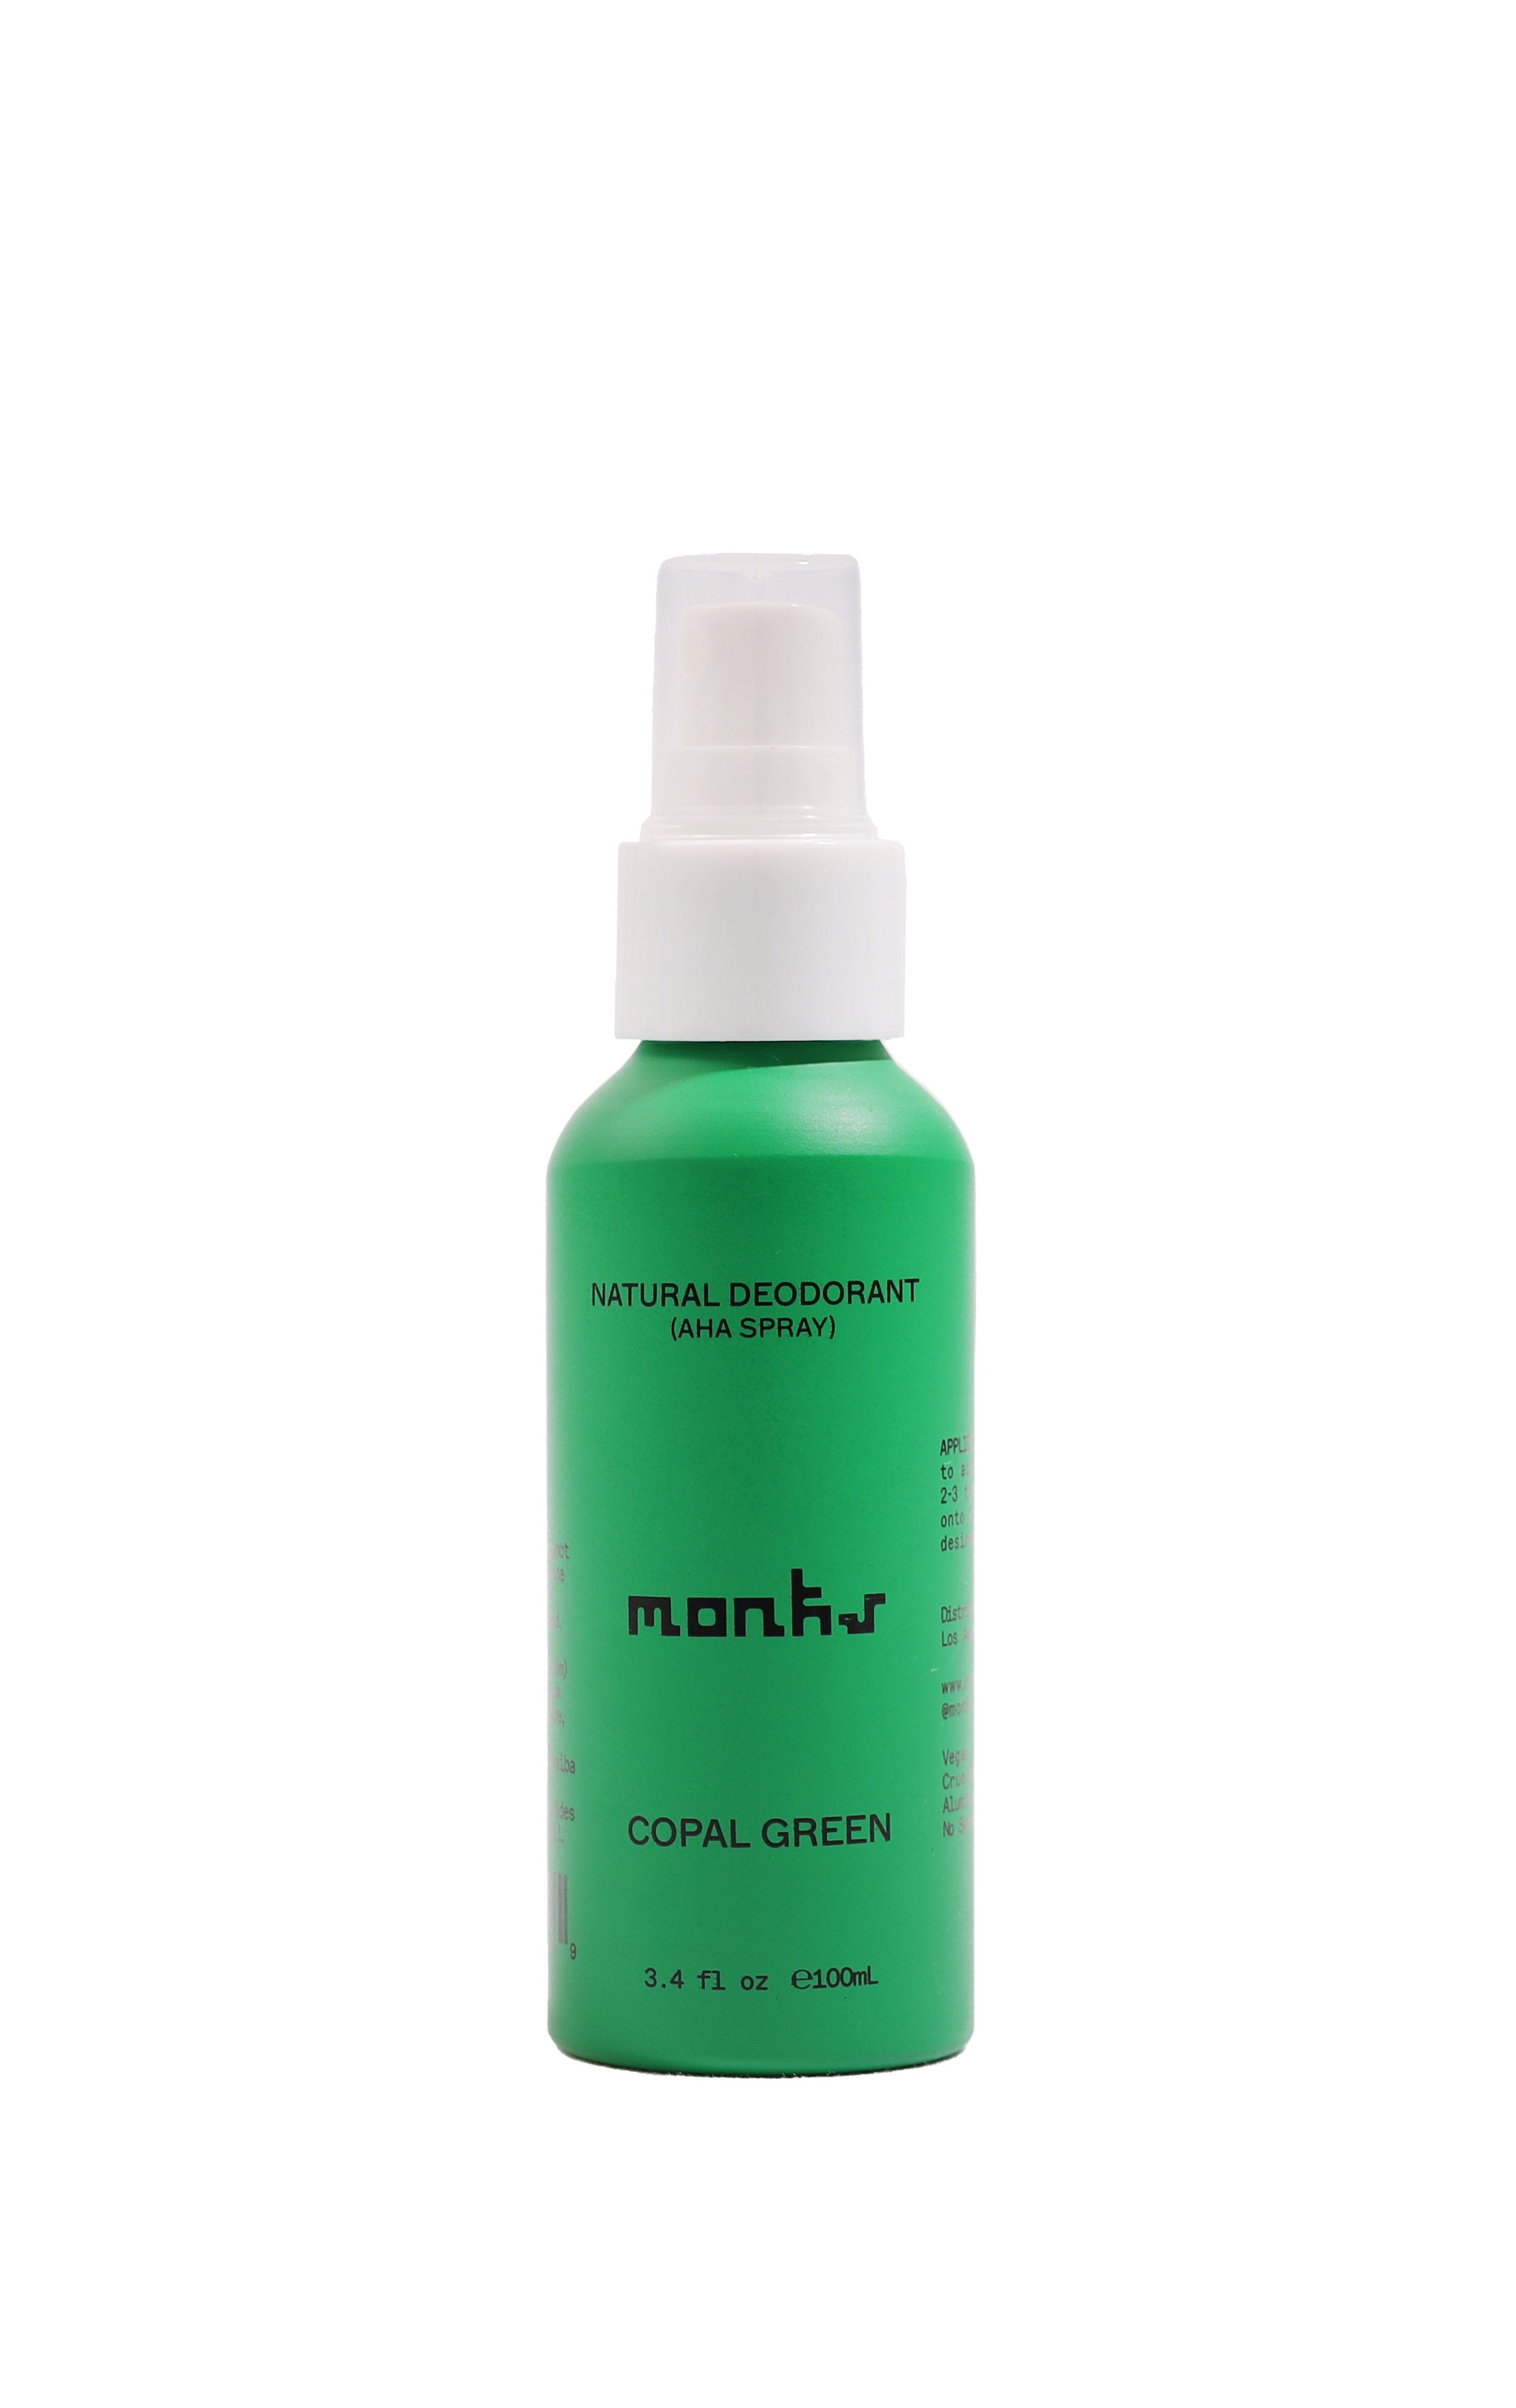 Monks - Copal Green (Natural Deodorant Spray) - 3.4 fl oz